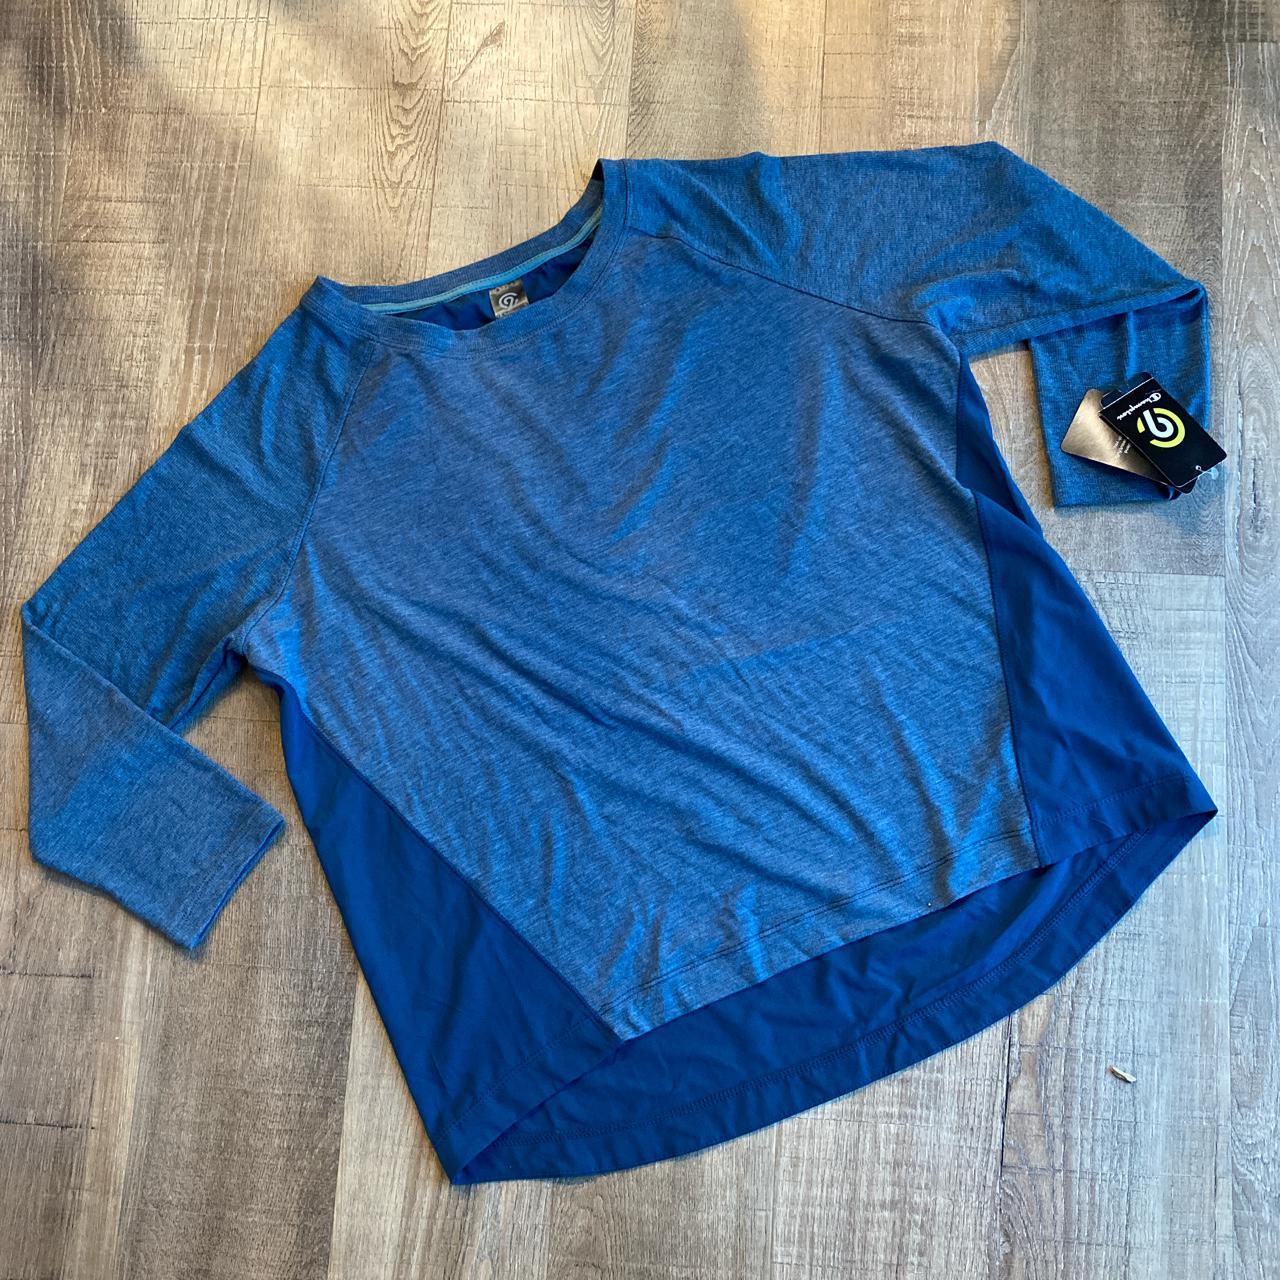 Product Image 1 - Champion. Shirt top jersey sweatshirt